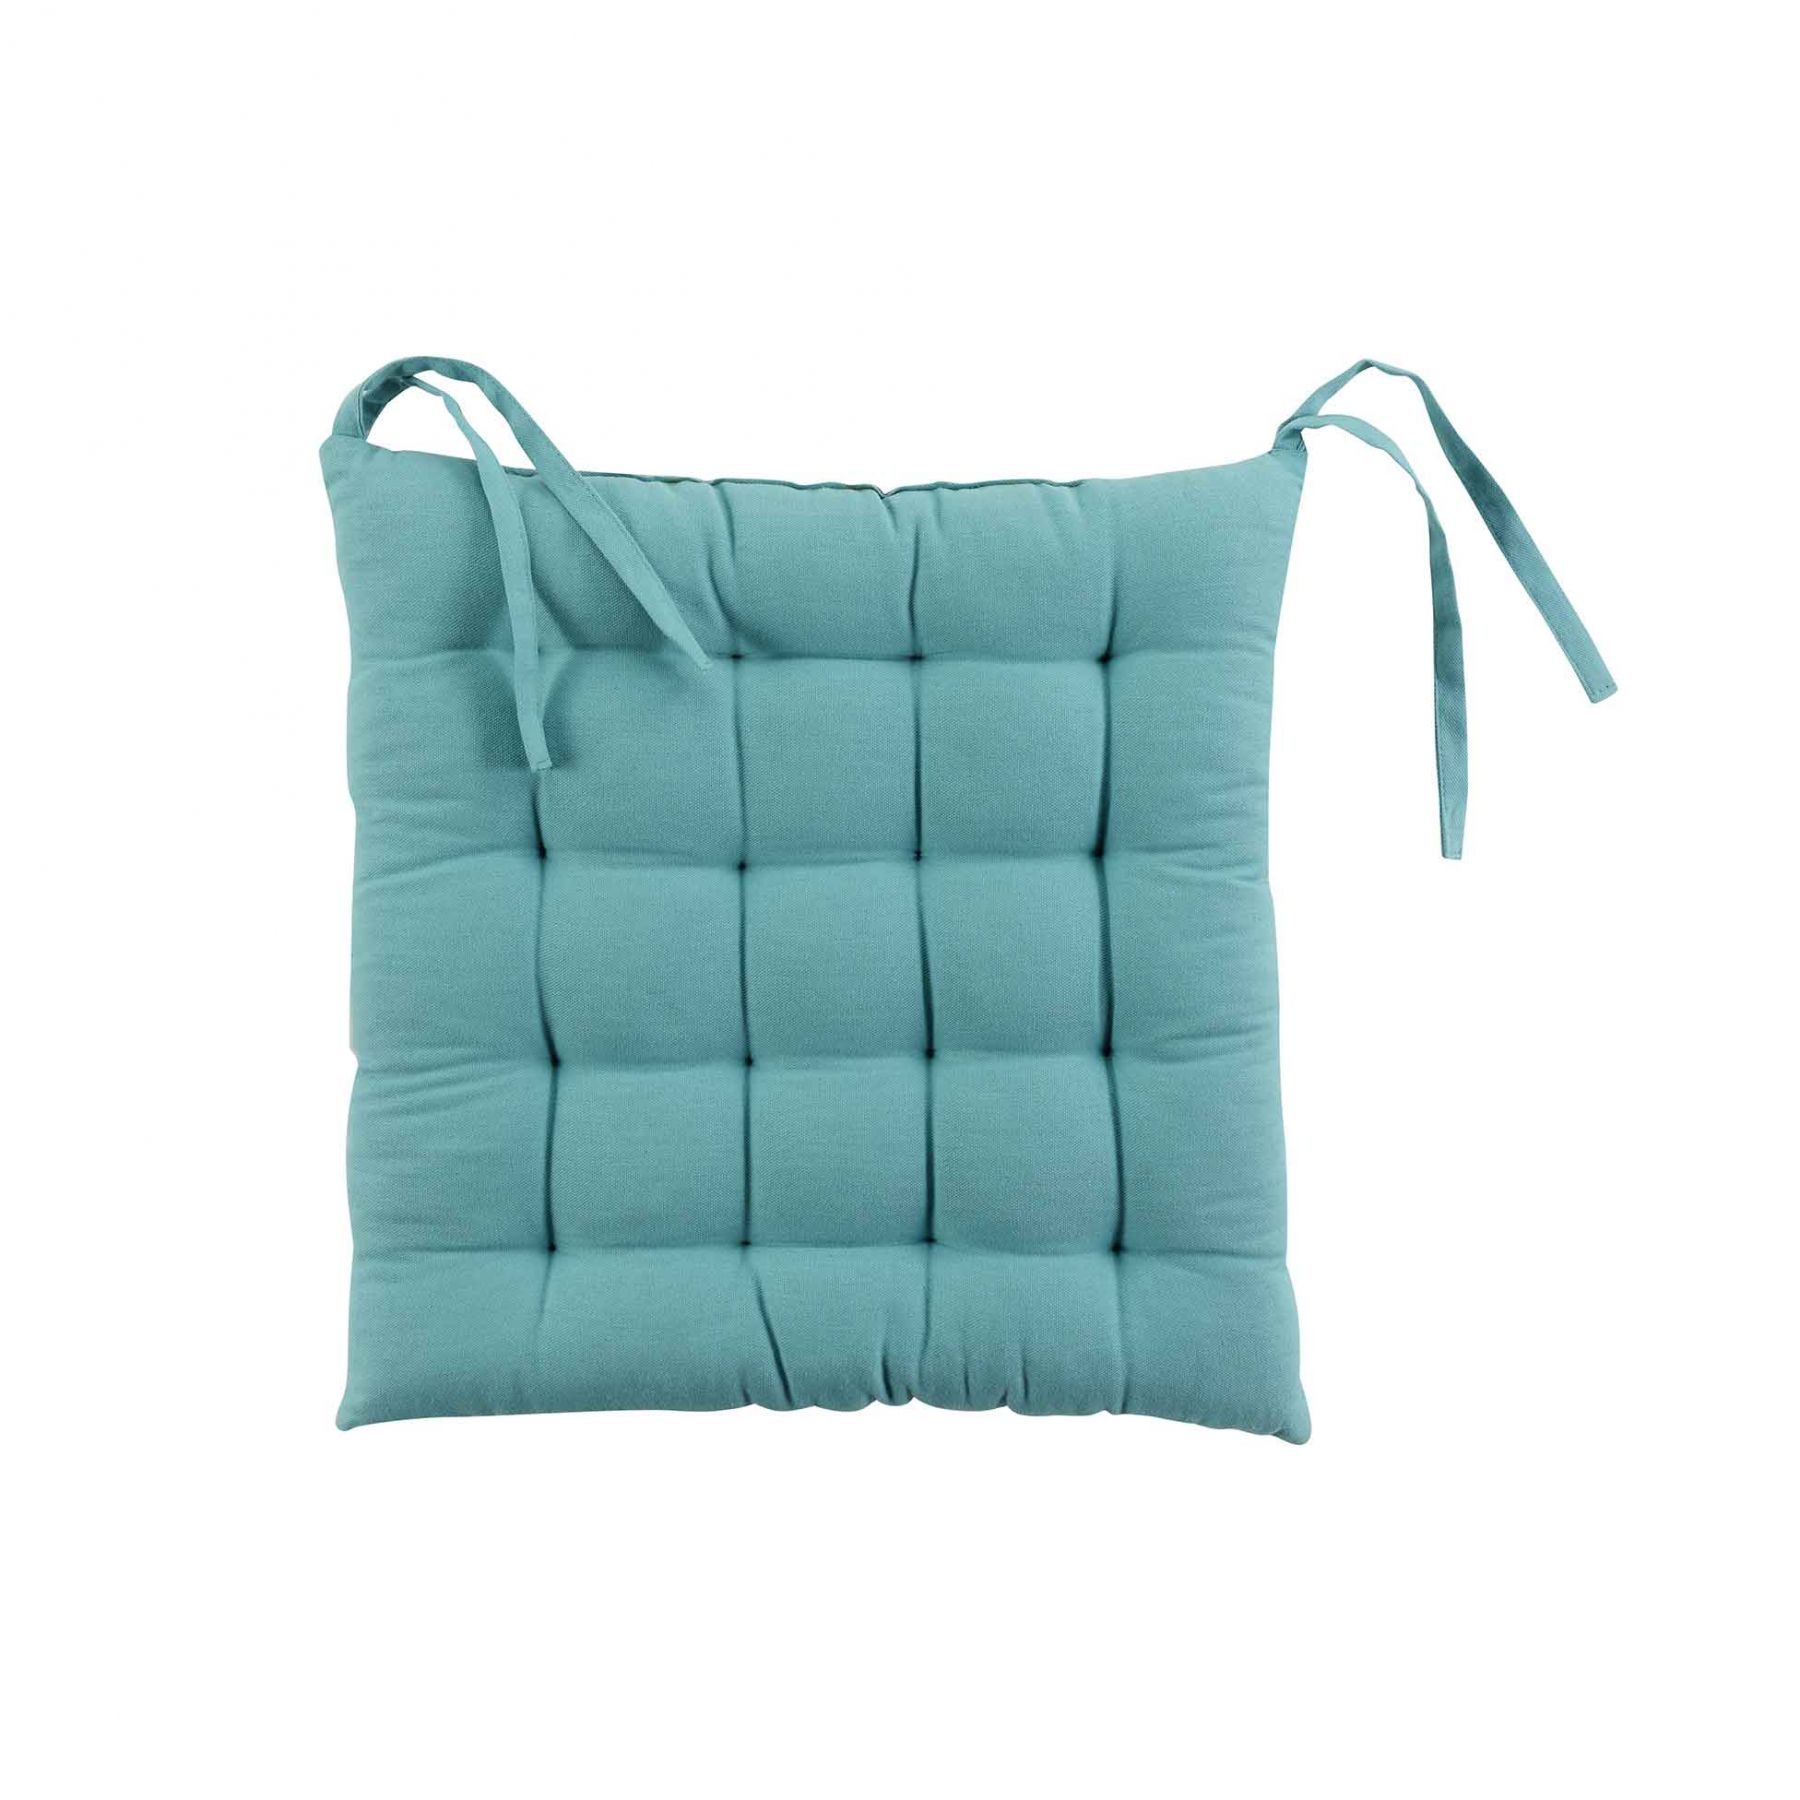 Douceur d\'intérieur Sedák na židli, oboustranný, modrá-antracitová barva, 40 x 40 cm - EMAKO.CZ s.r.o.